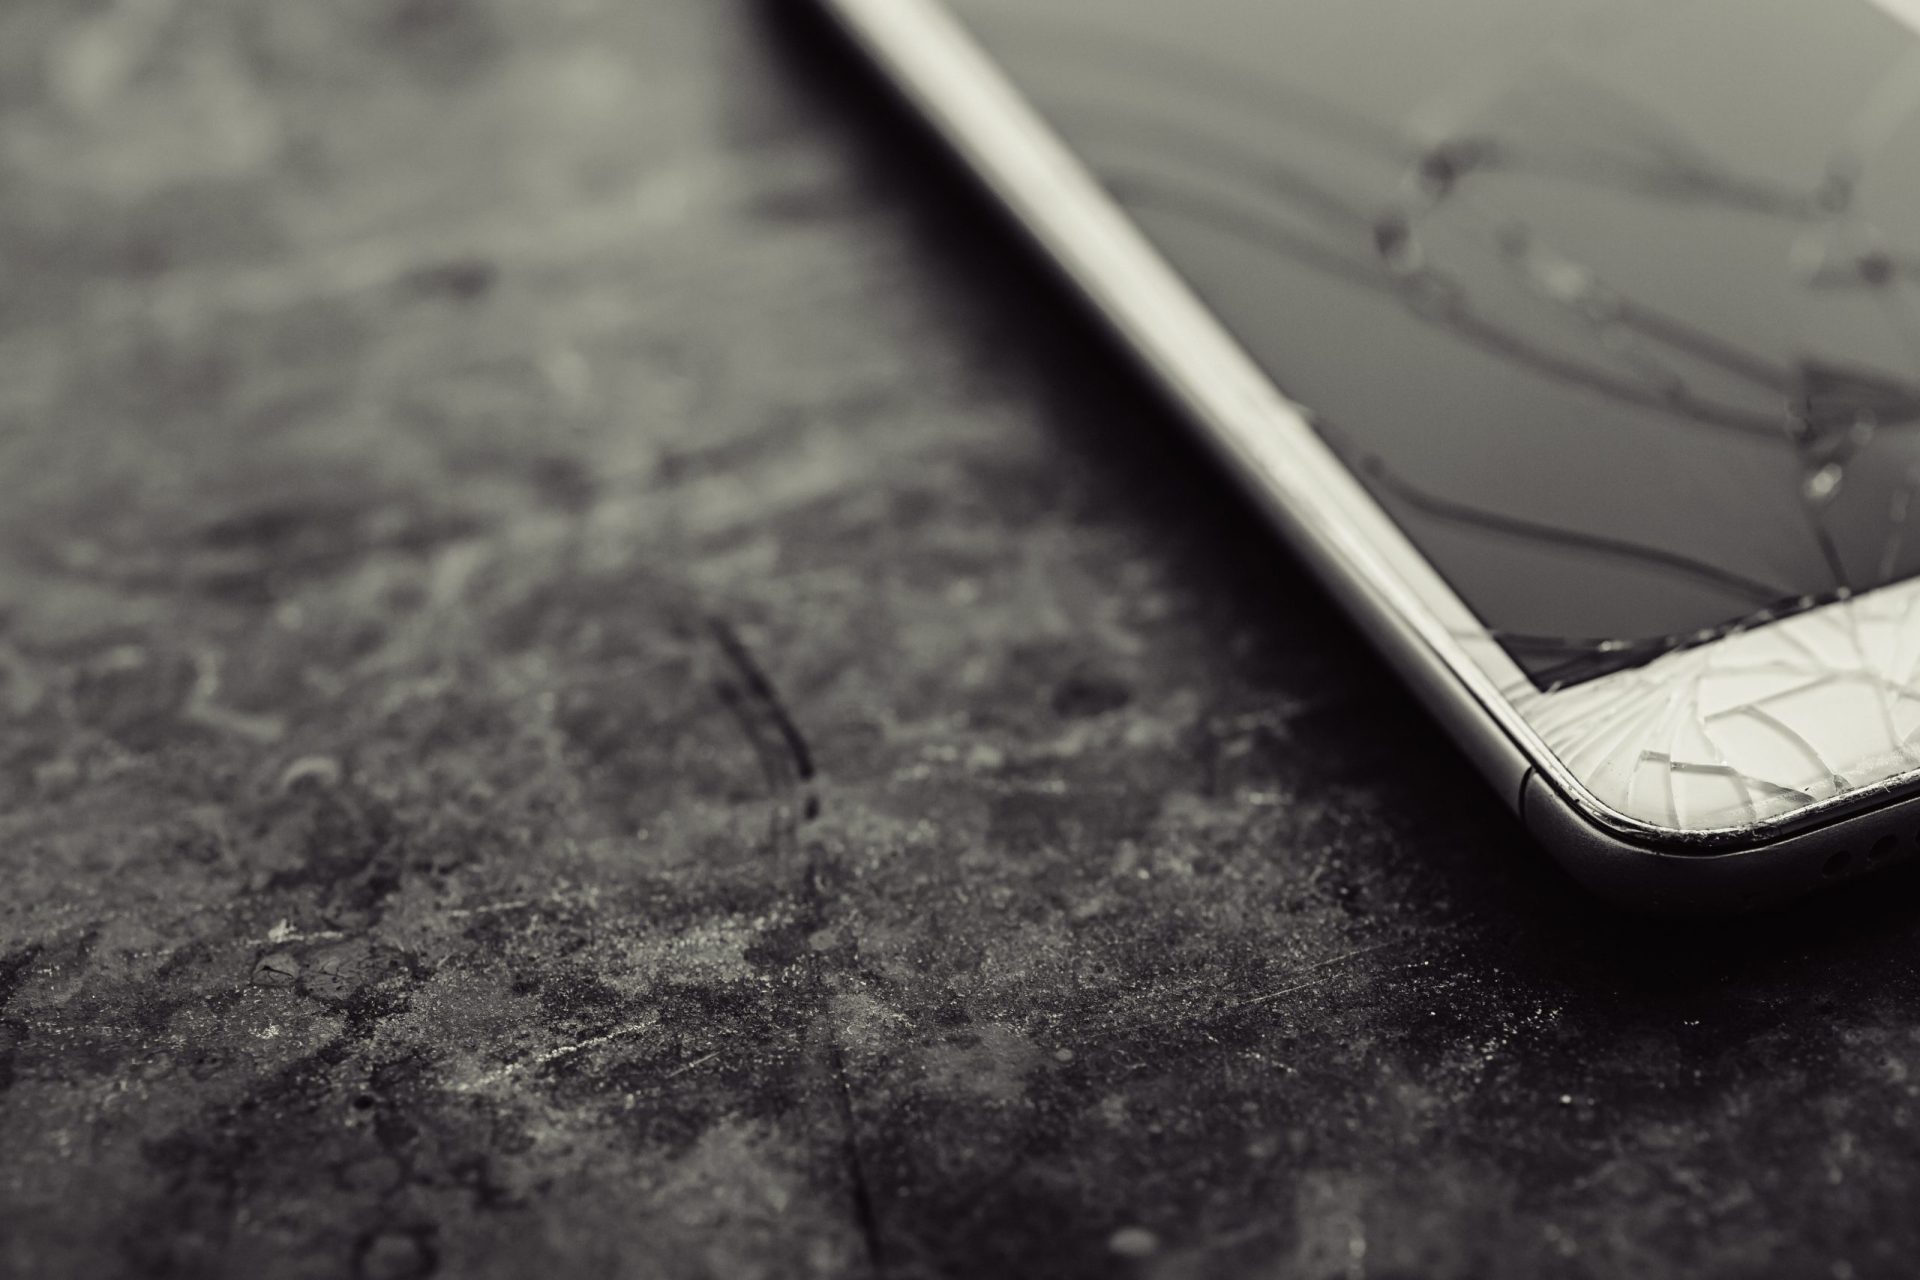 Smart phone with broken screen on dark background. Close-up.